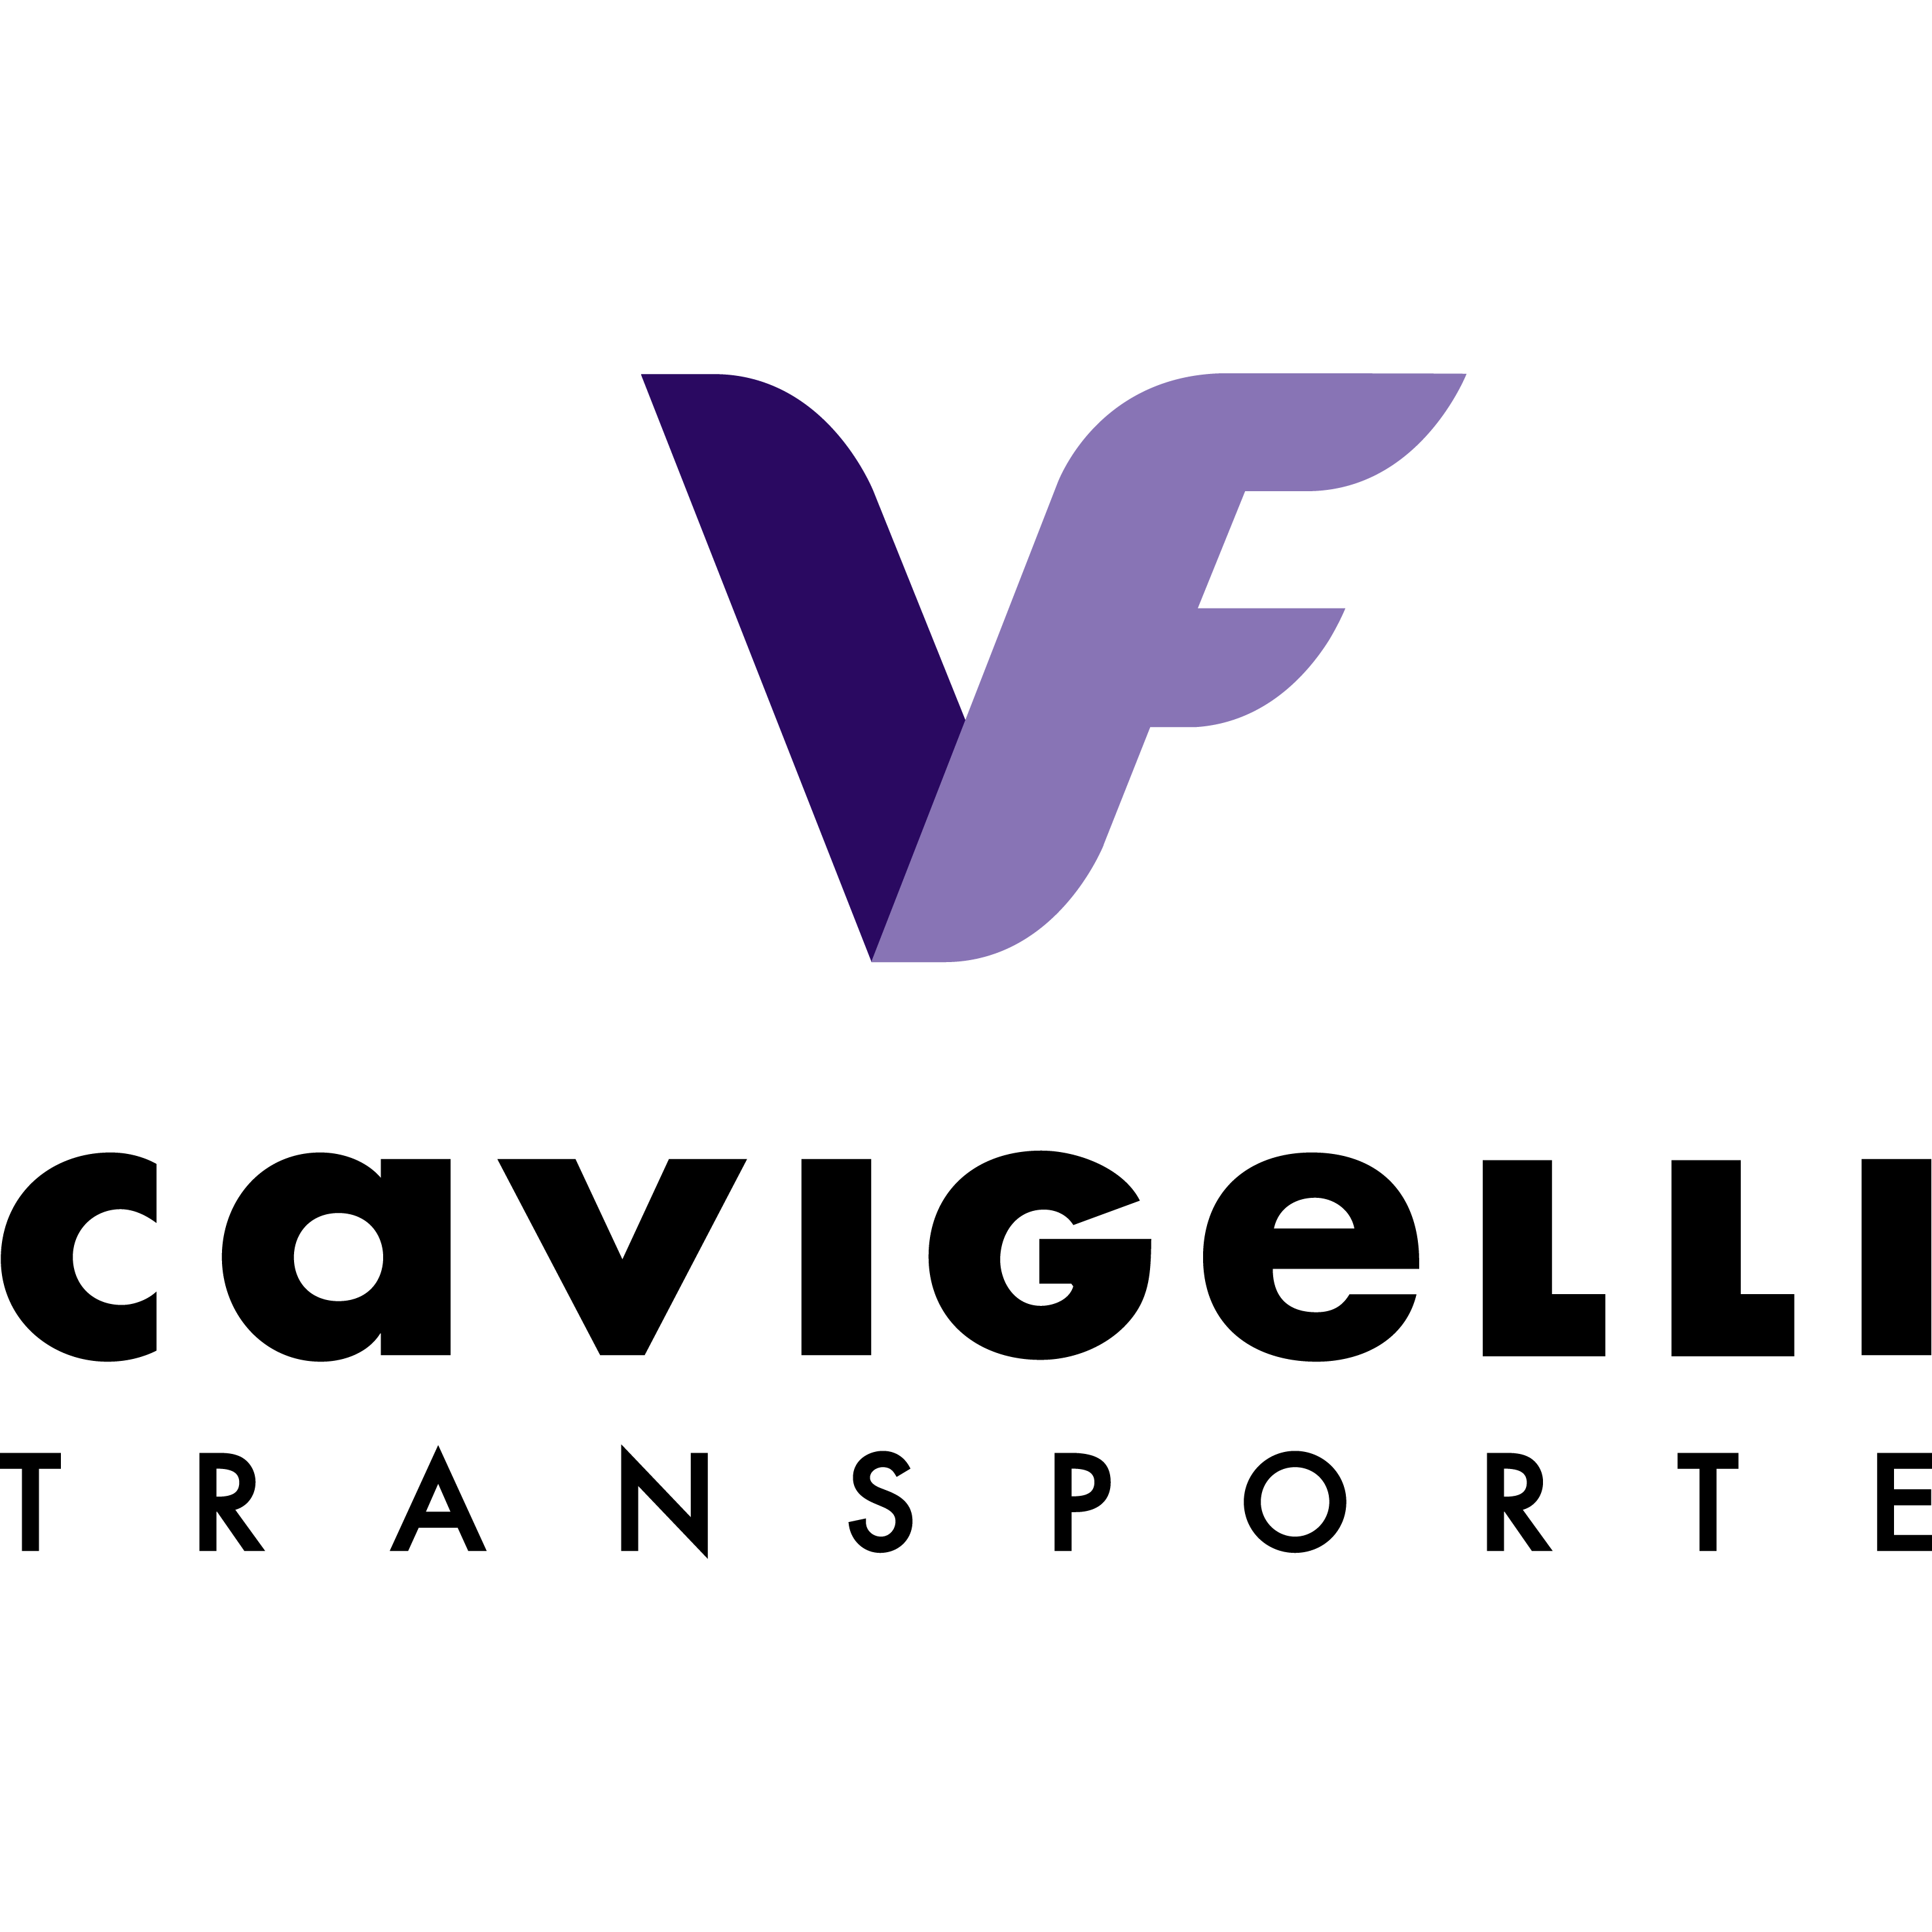 V & F Cavigelli Transporte AG Logo